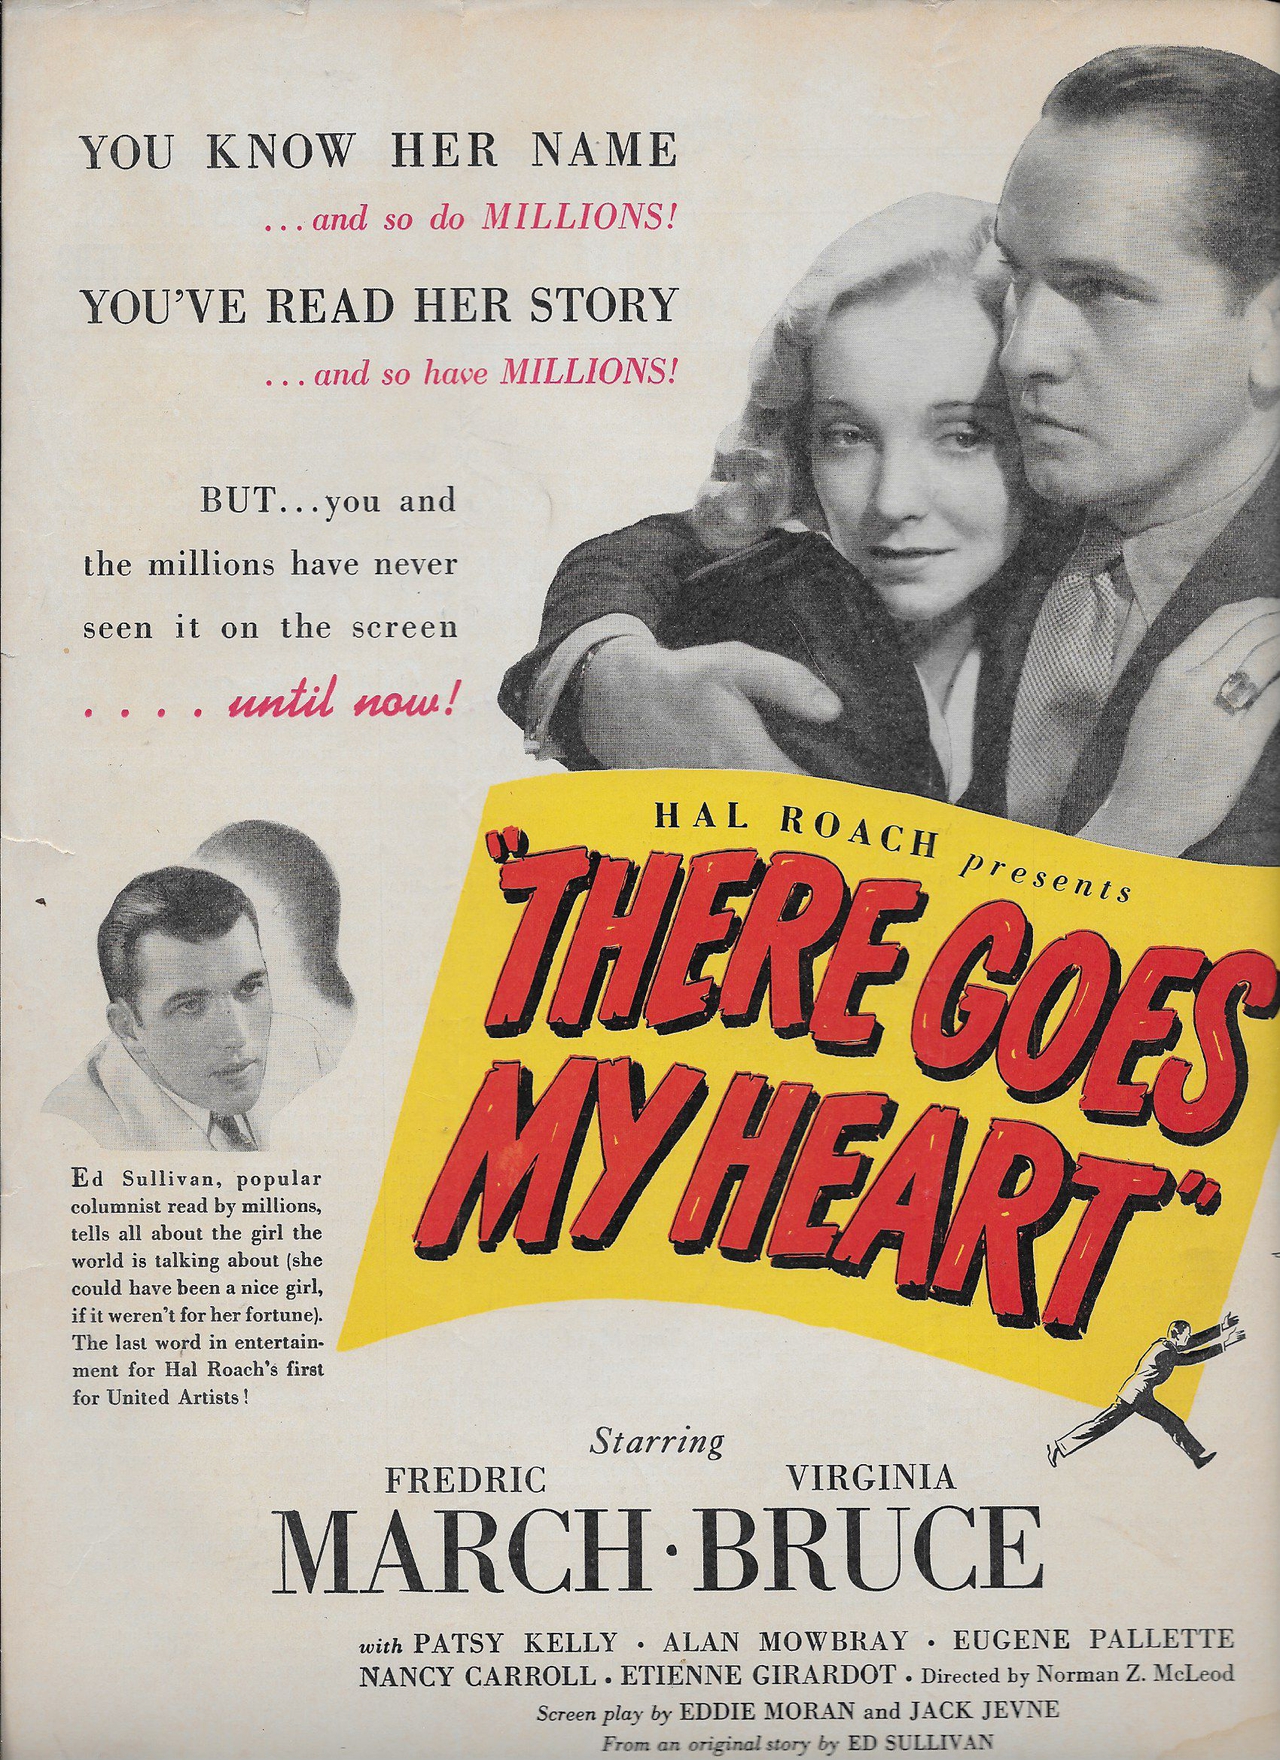 Virginia Bruce در صحنه فیلم سینمایی There Goes My Heart به همراه Ed Sullivan و فردریک مارچ